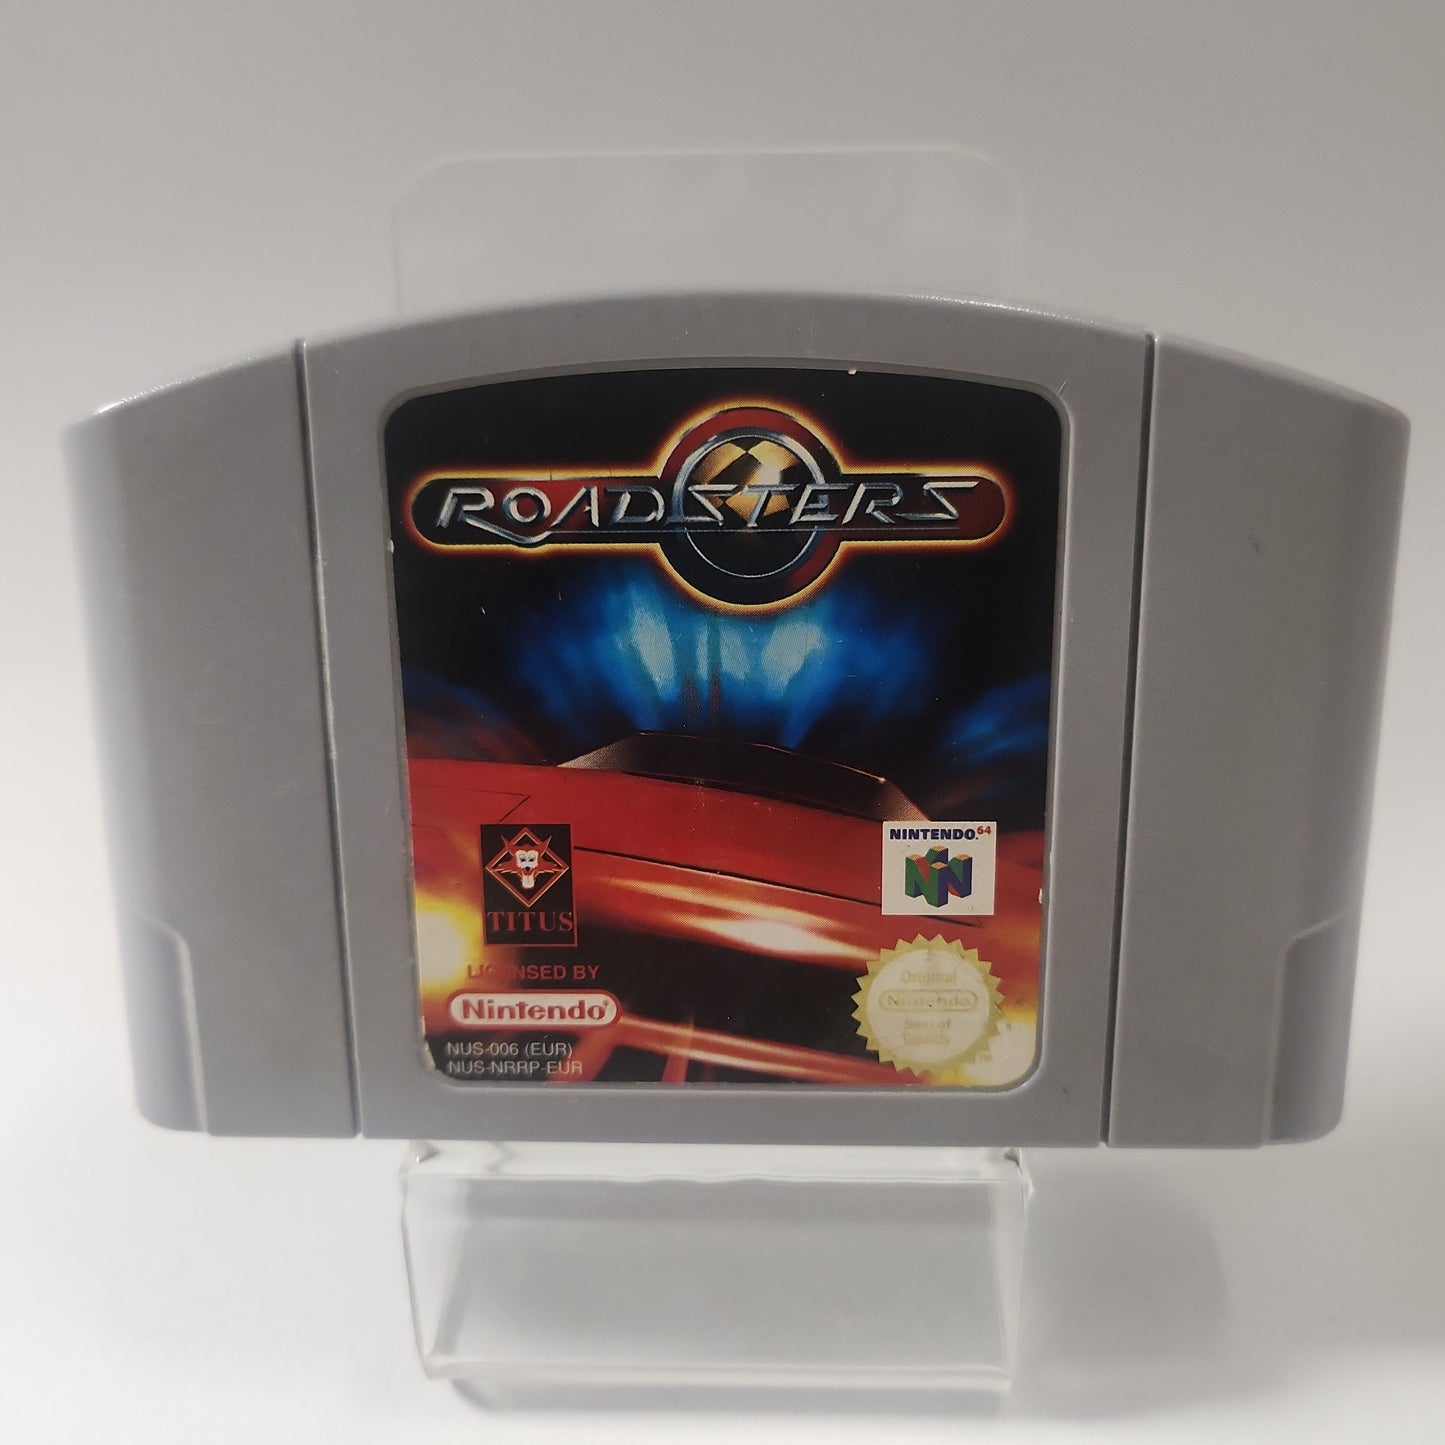 Roadster Nintendo 64